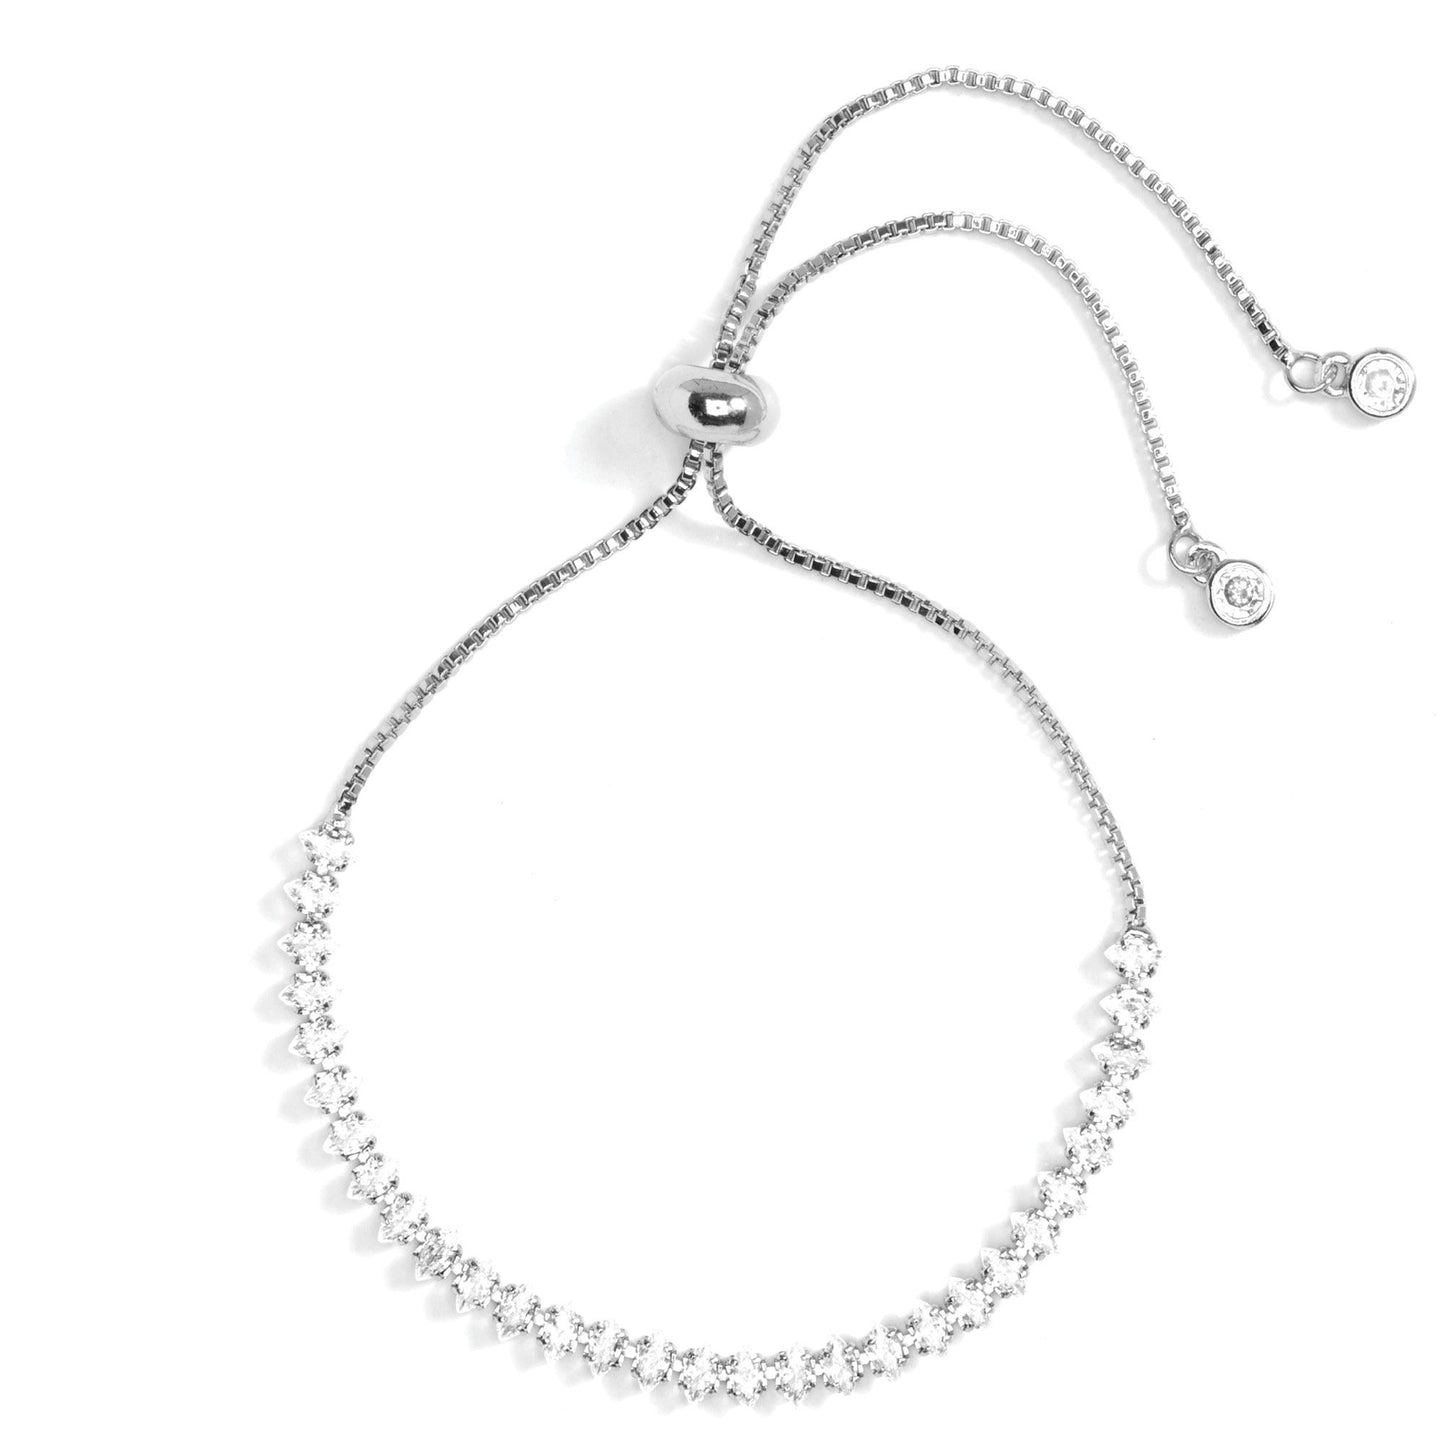 Silver Adjustable Tennis Bracelet with CZ